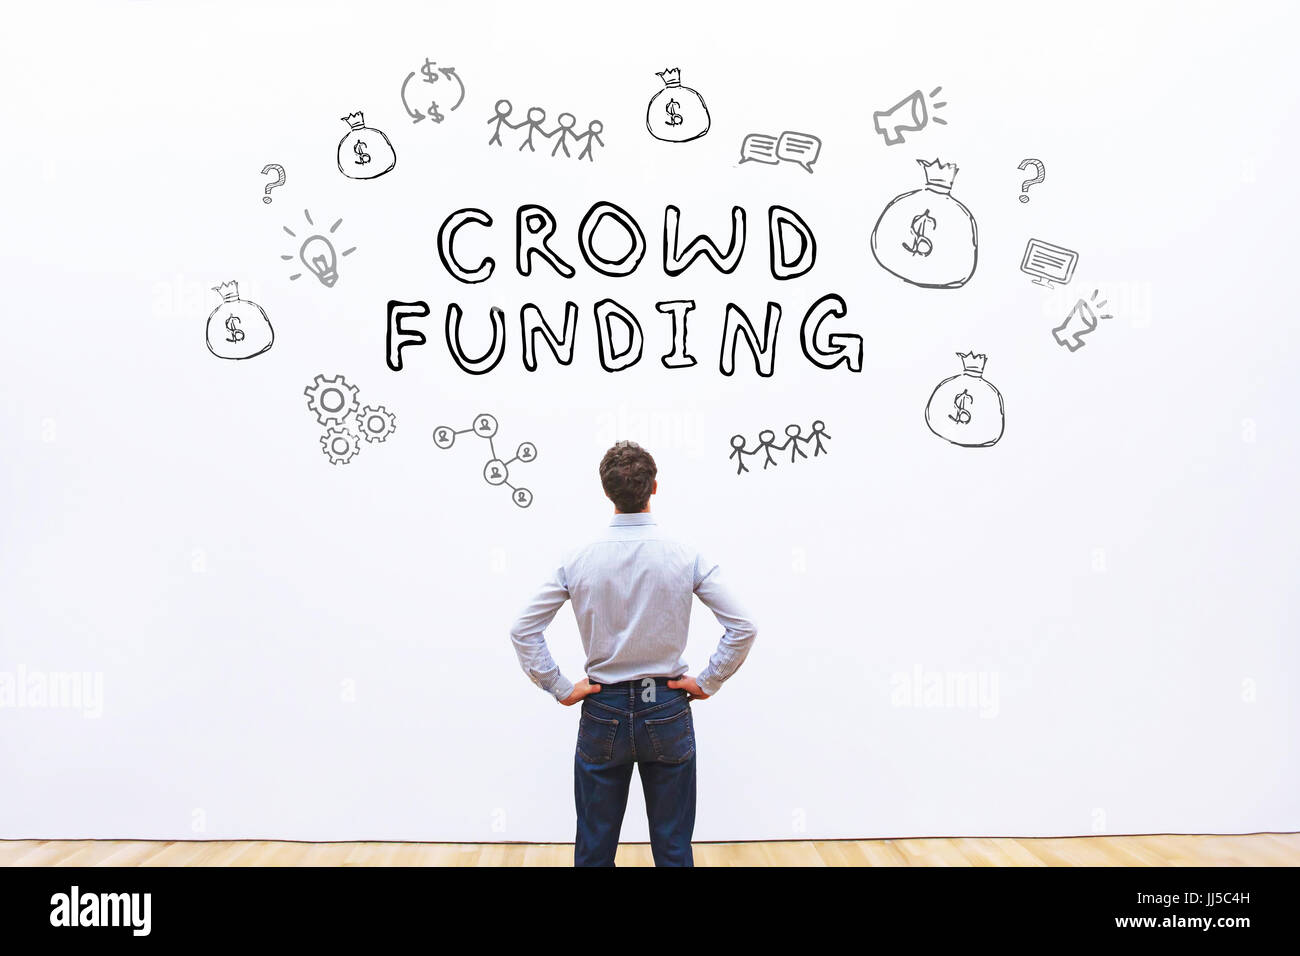 Crowdfunding-Konzept Stockfoto